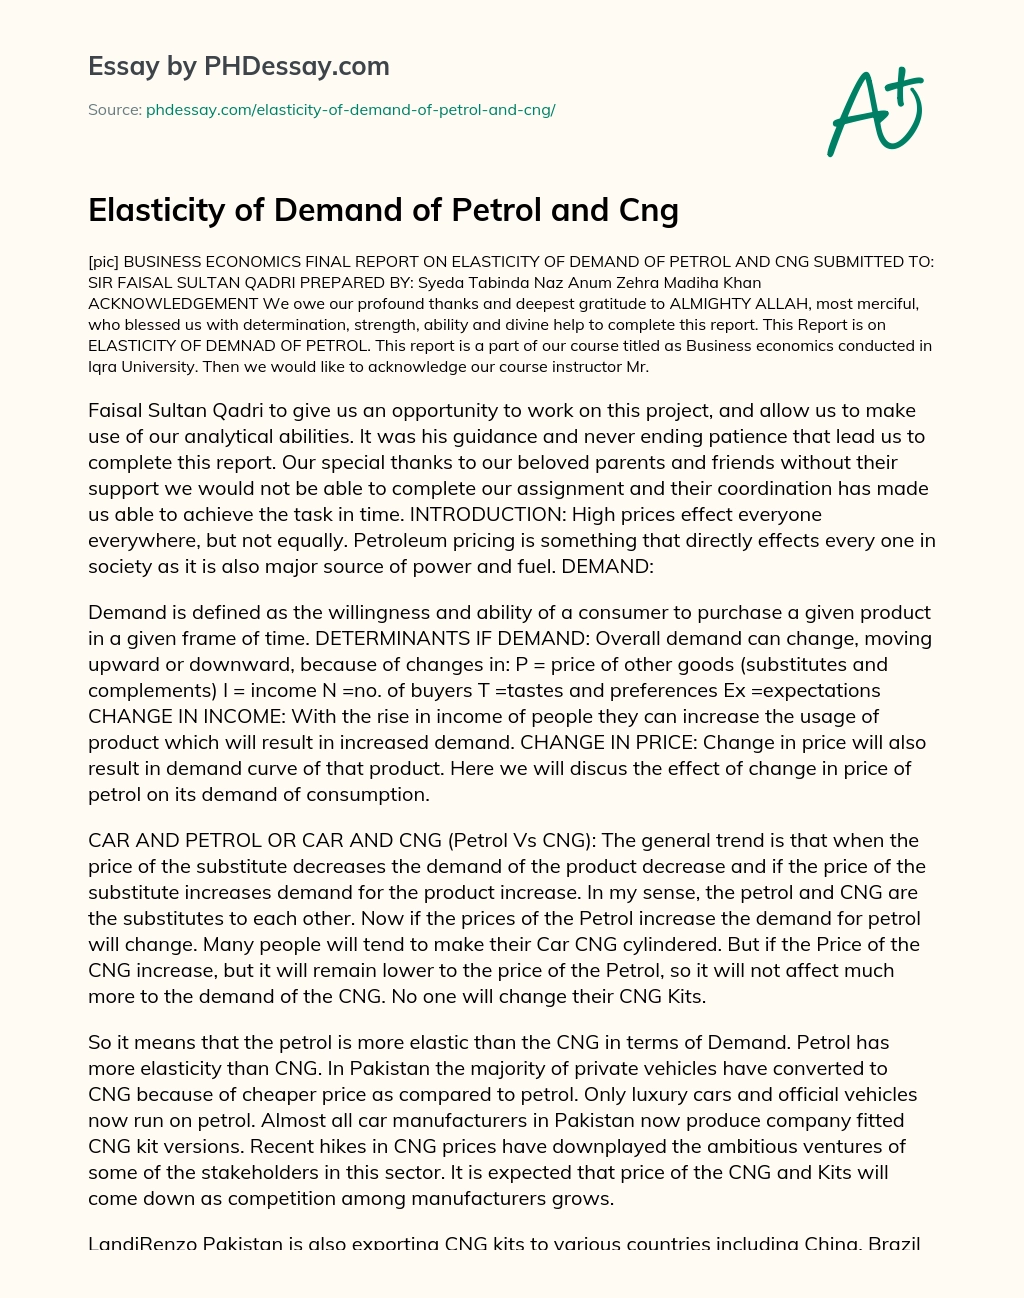 Elasticity of Demand of Petrol and Cng essay